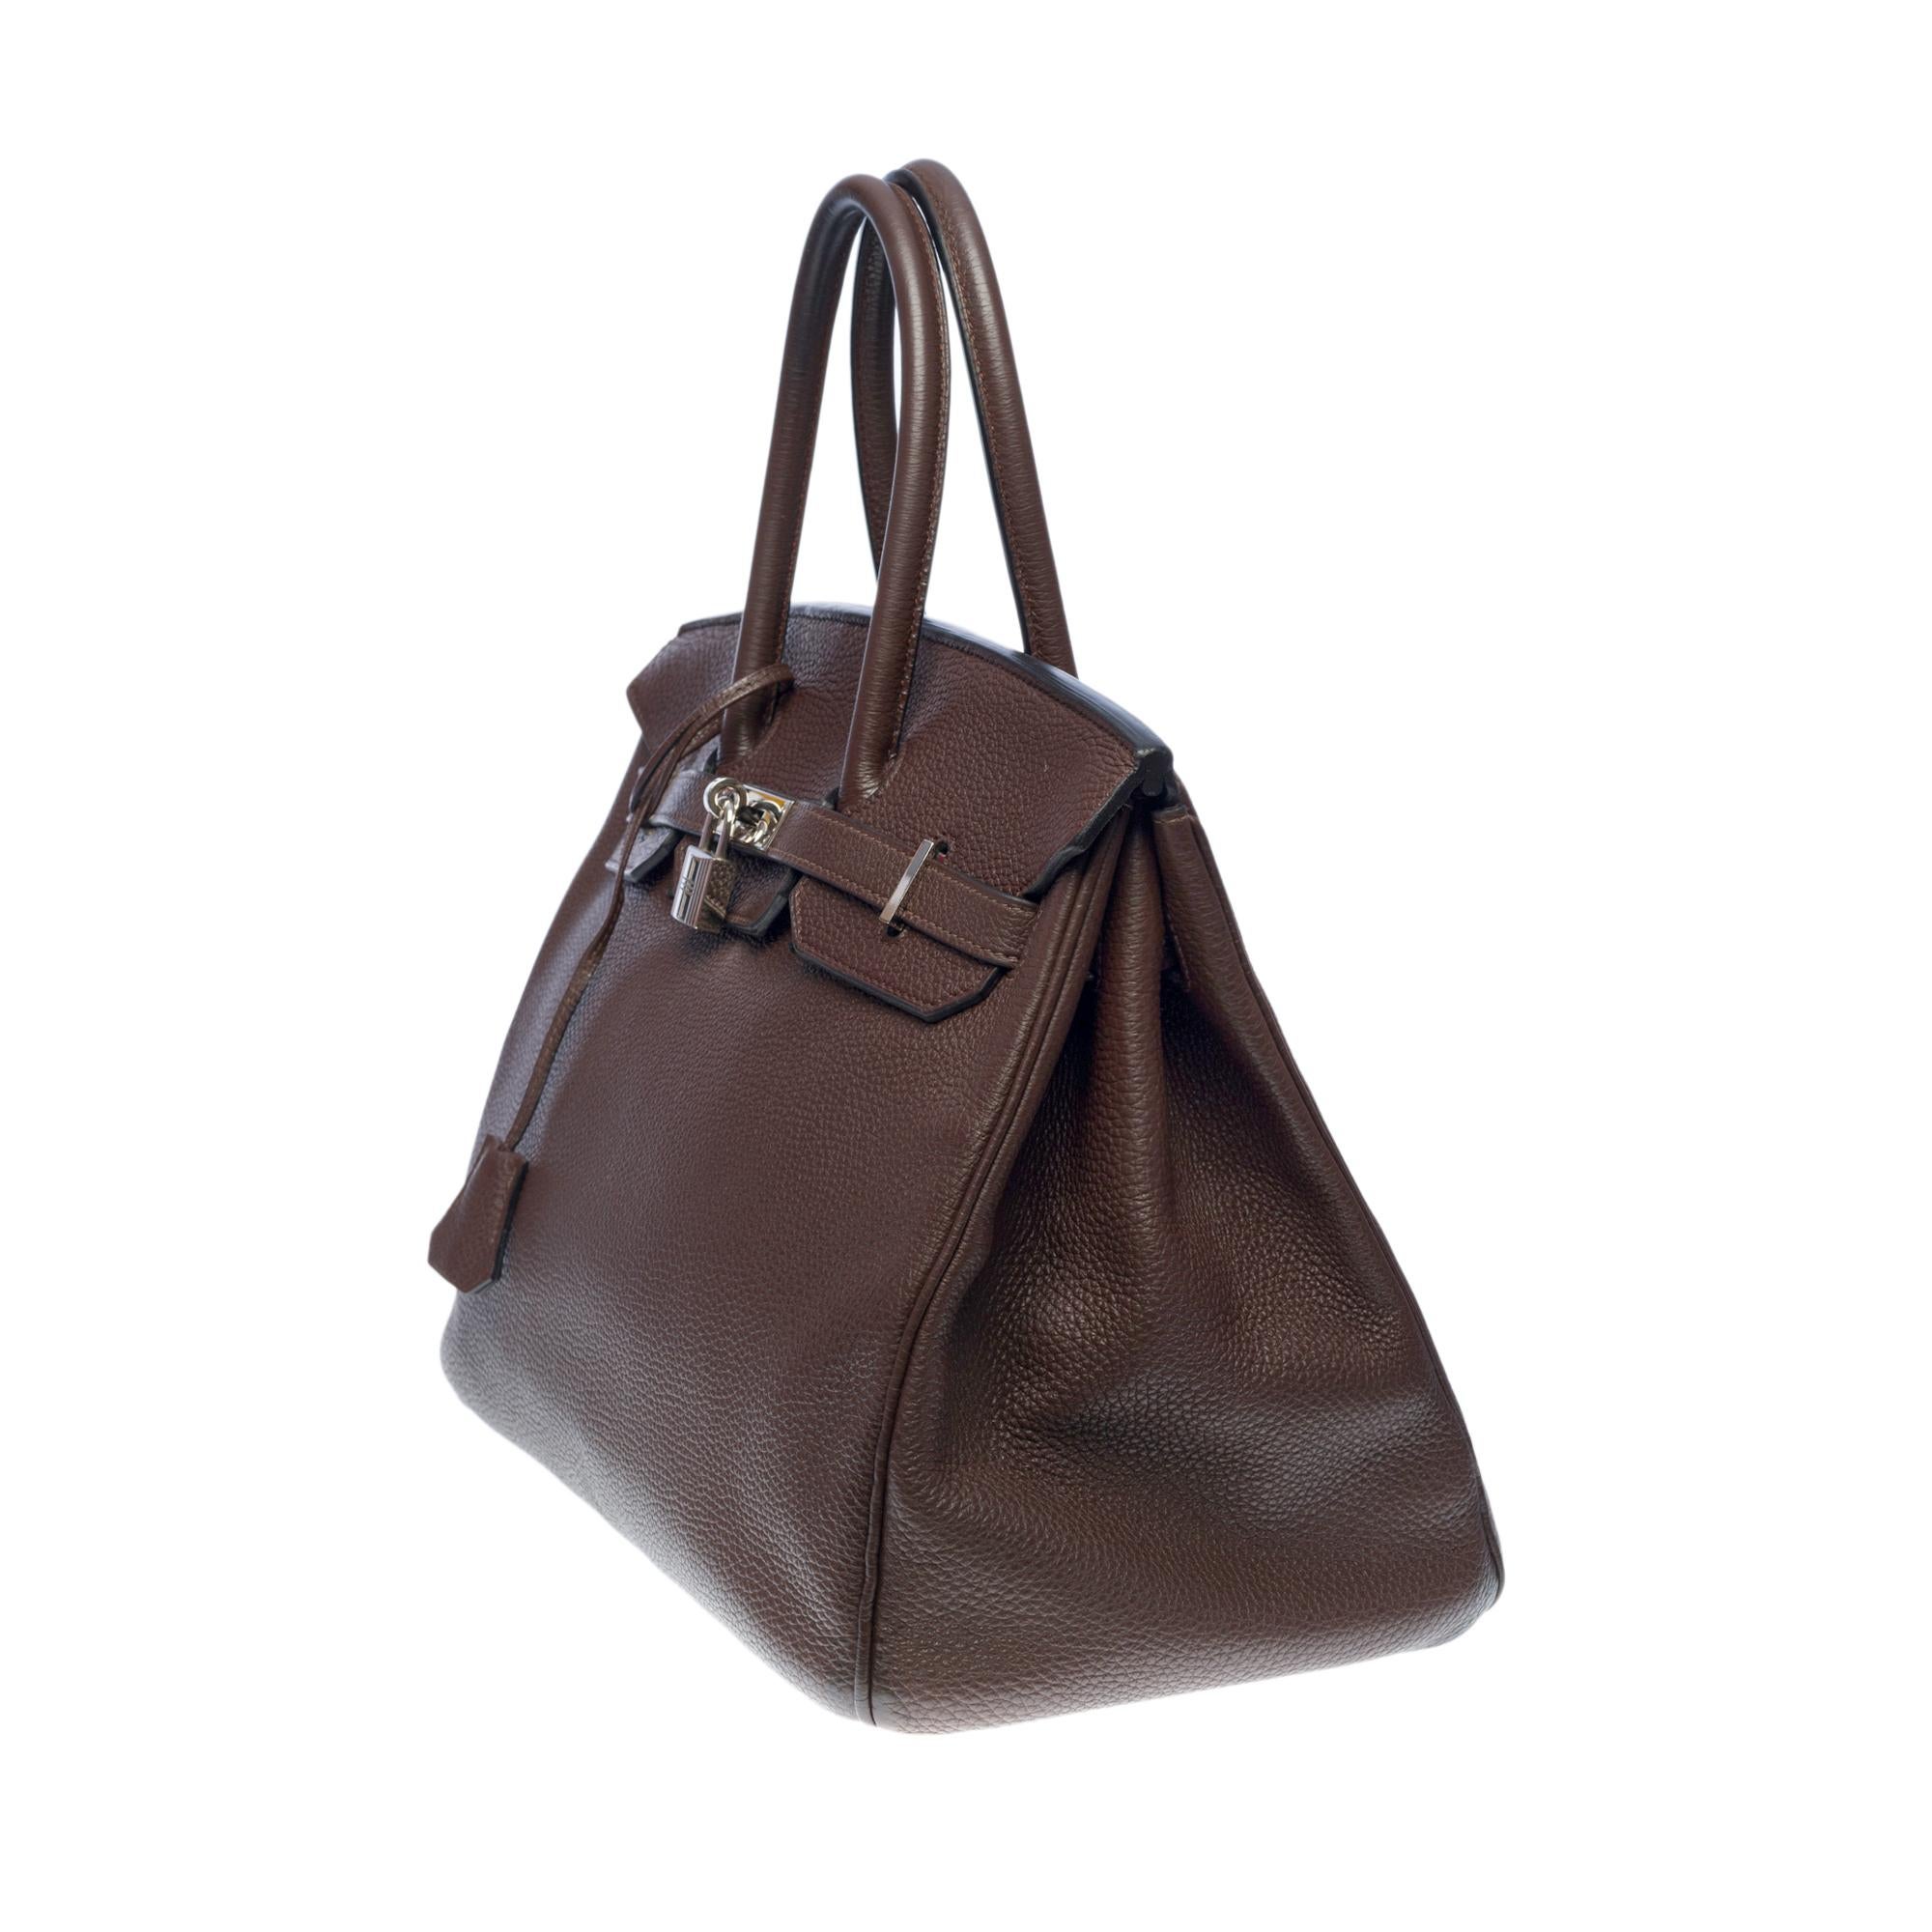 Gray Splendid Hermès Birkin 35 handbag in brown Taurillon Clémence leather, SHW